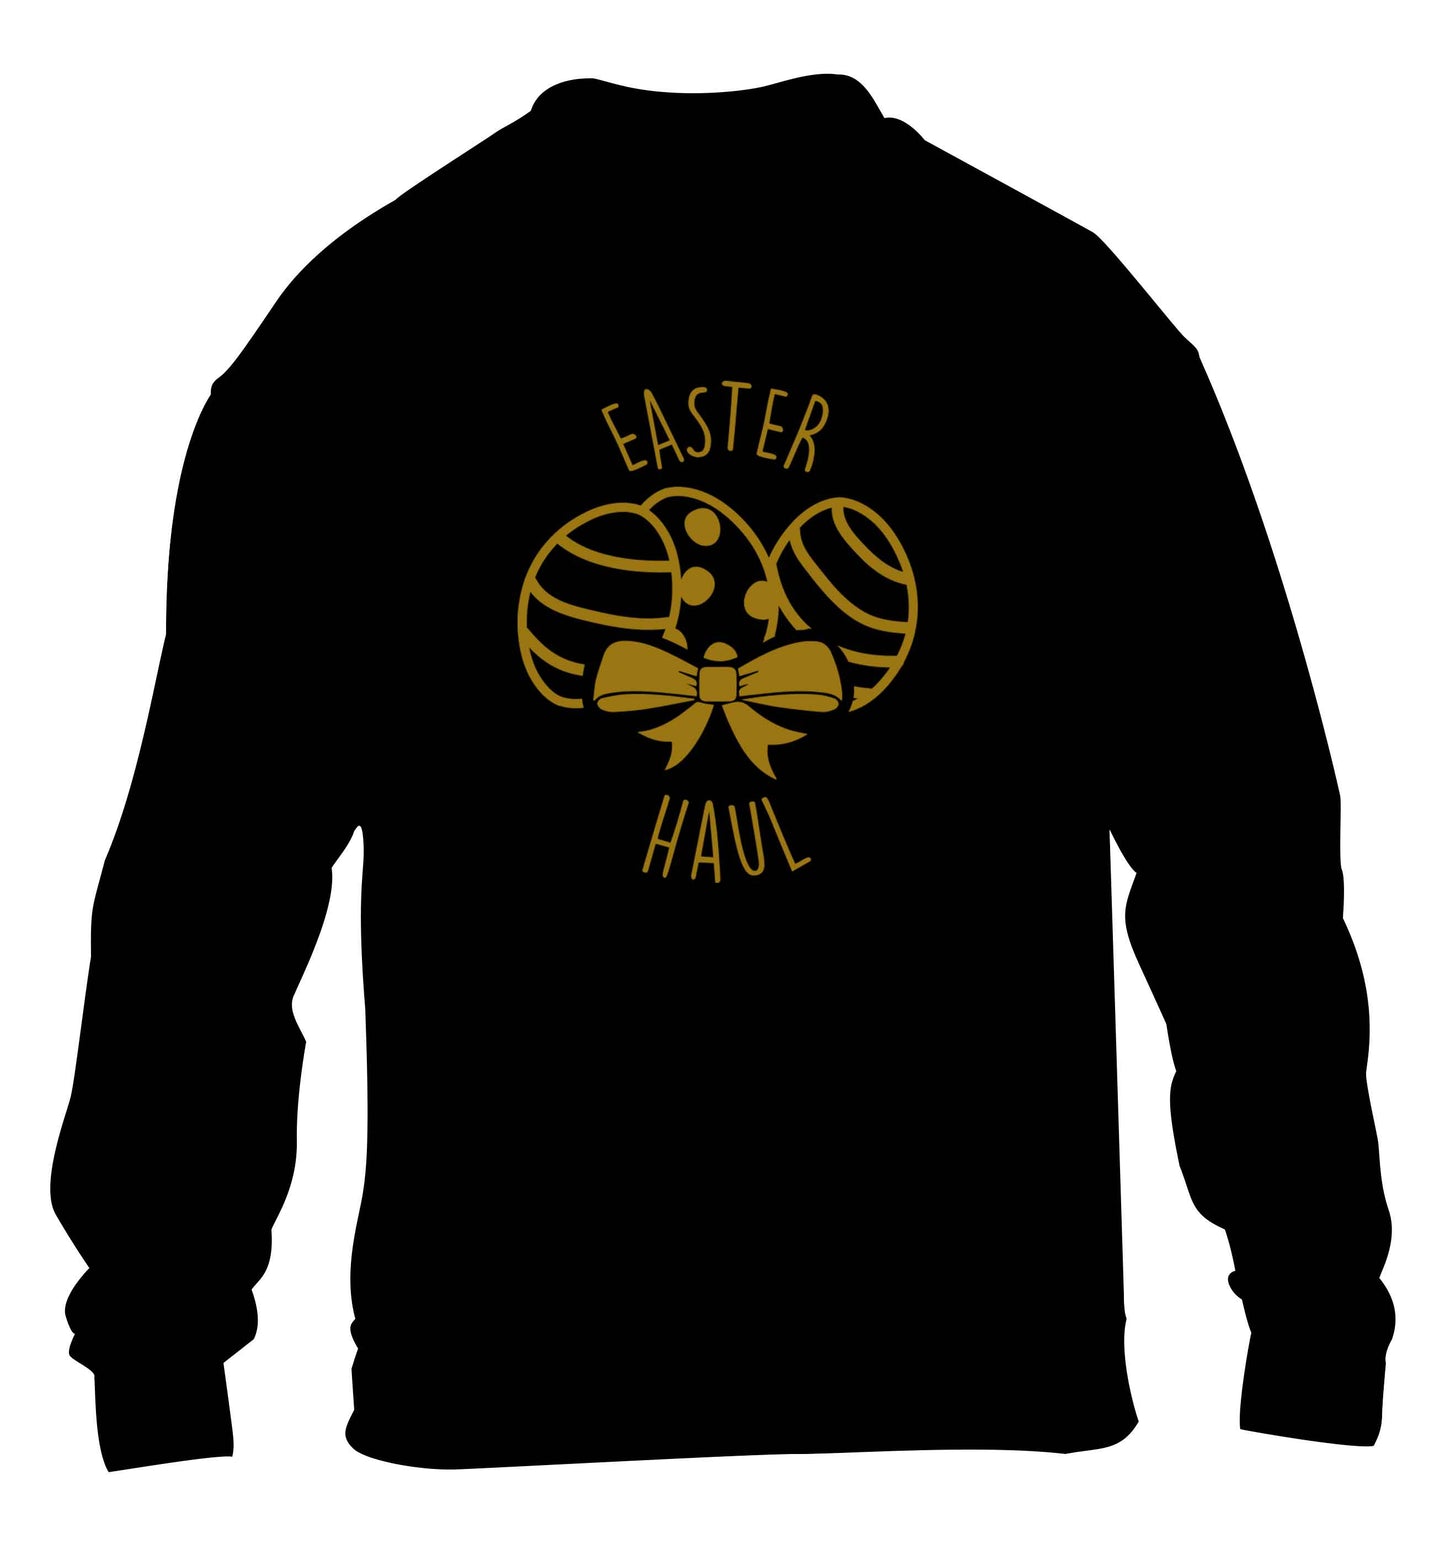 Easter haul children's black sweater 12-13 Years